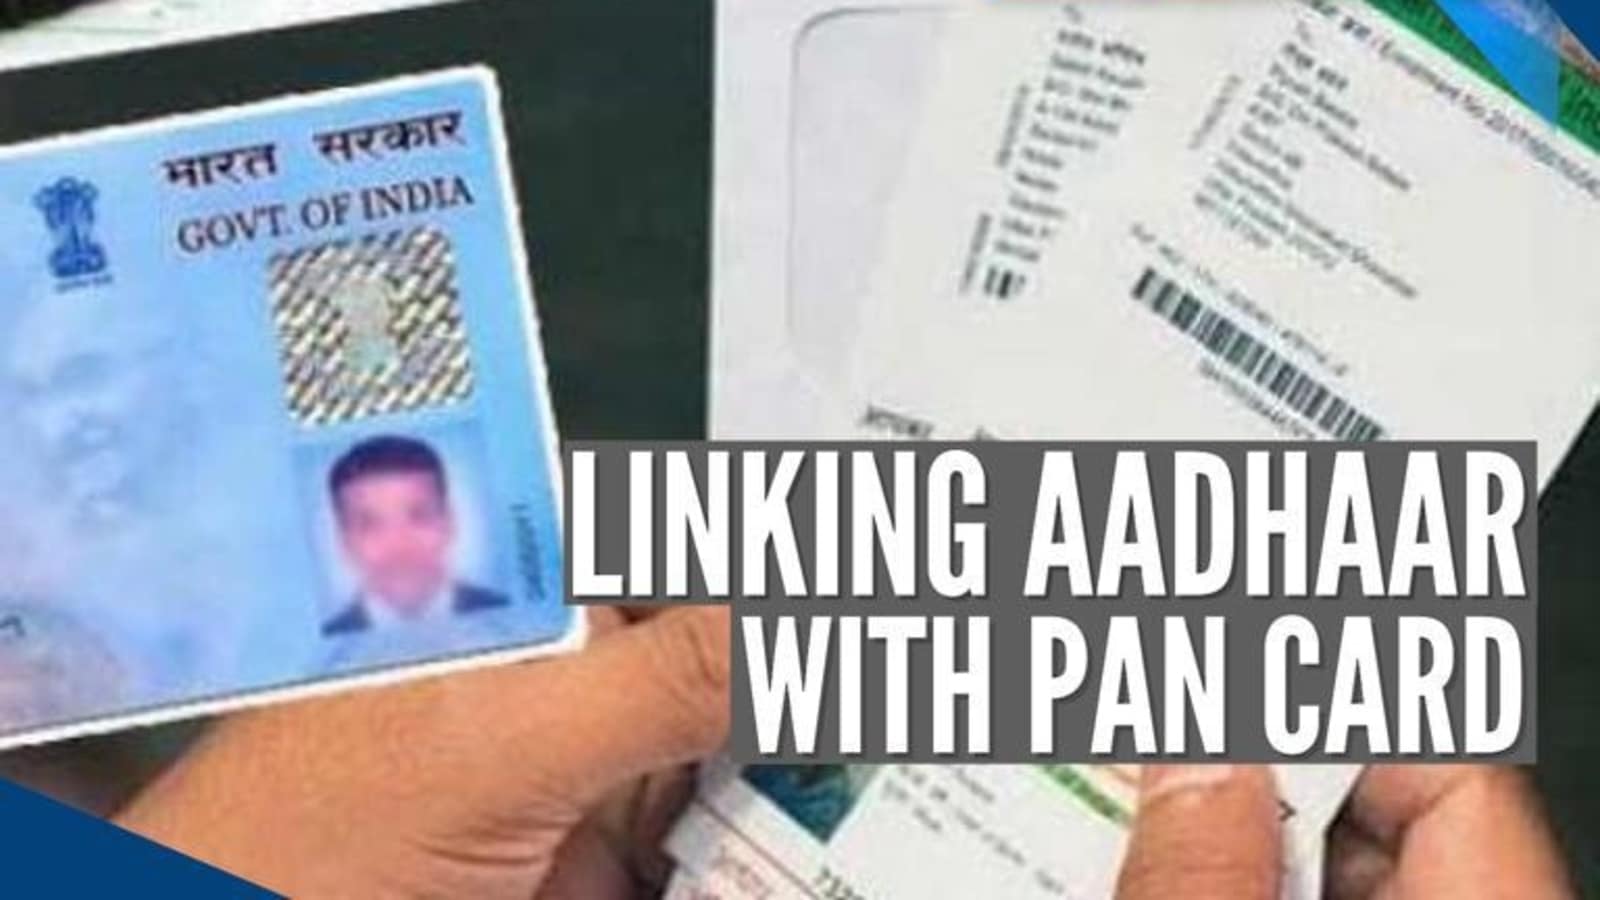 your pan card could be invalid without aadhaar card  1 जलई स आपक PAN  करड ह सकत ह इनवलड जन कय  दश नयज